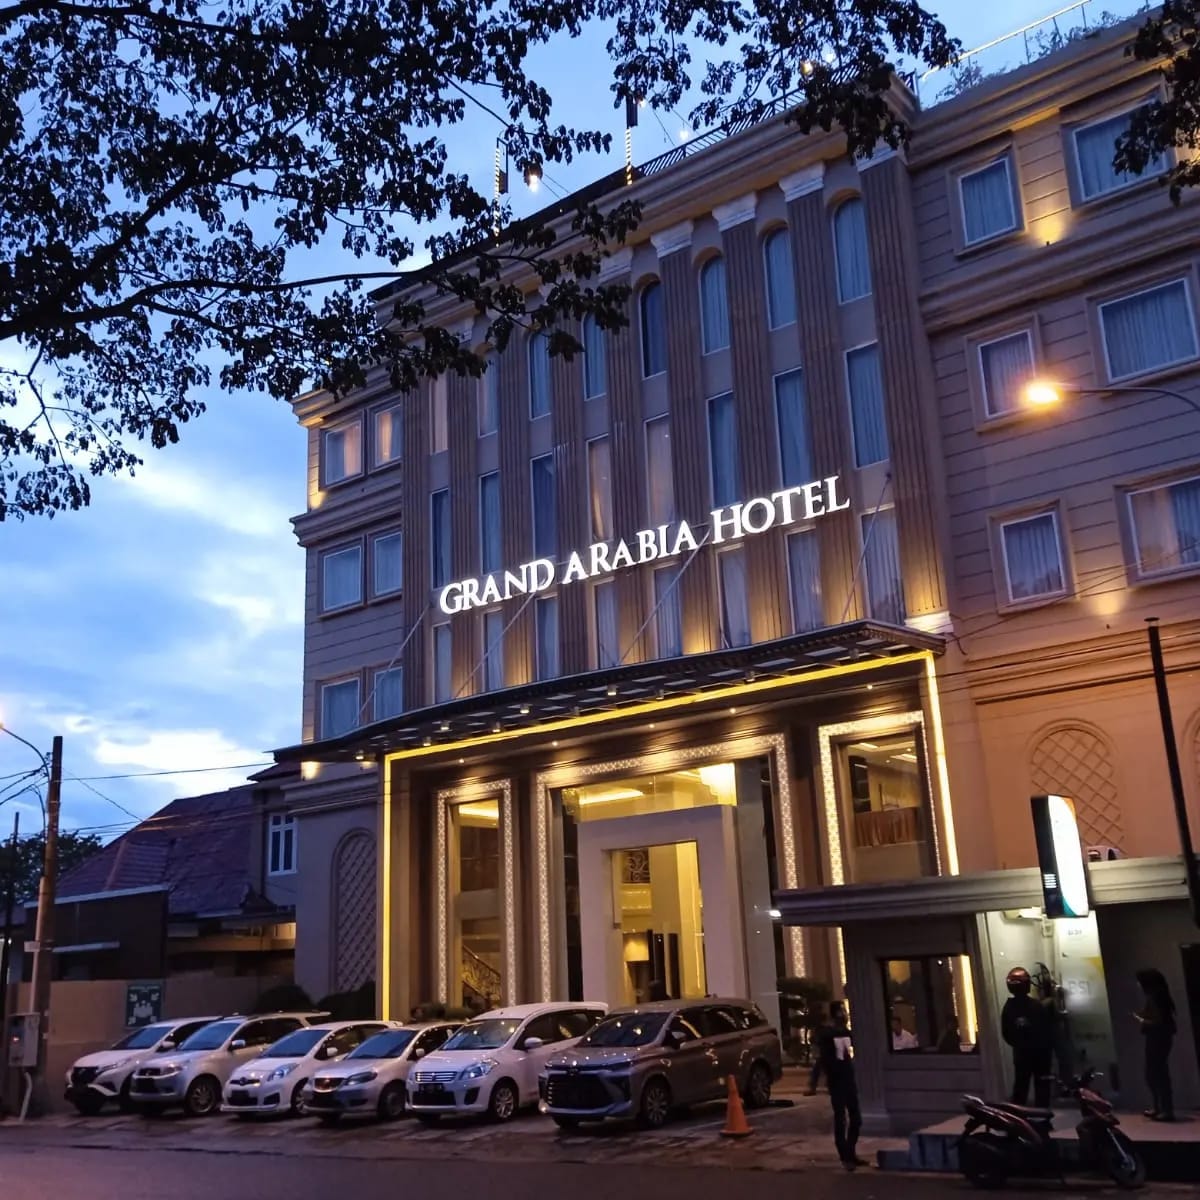 Hotel Grand Arabia Banda Aceh 